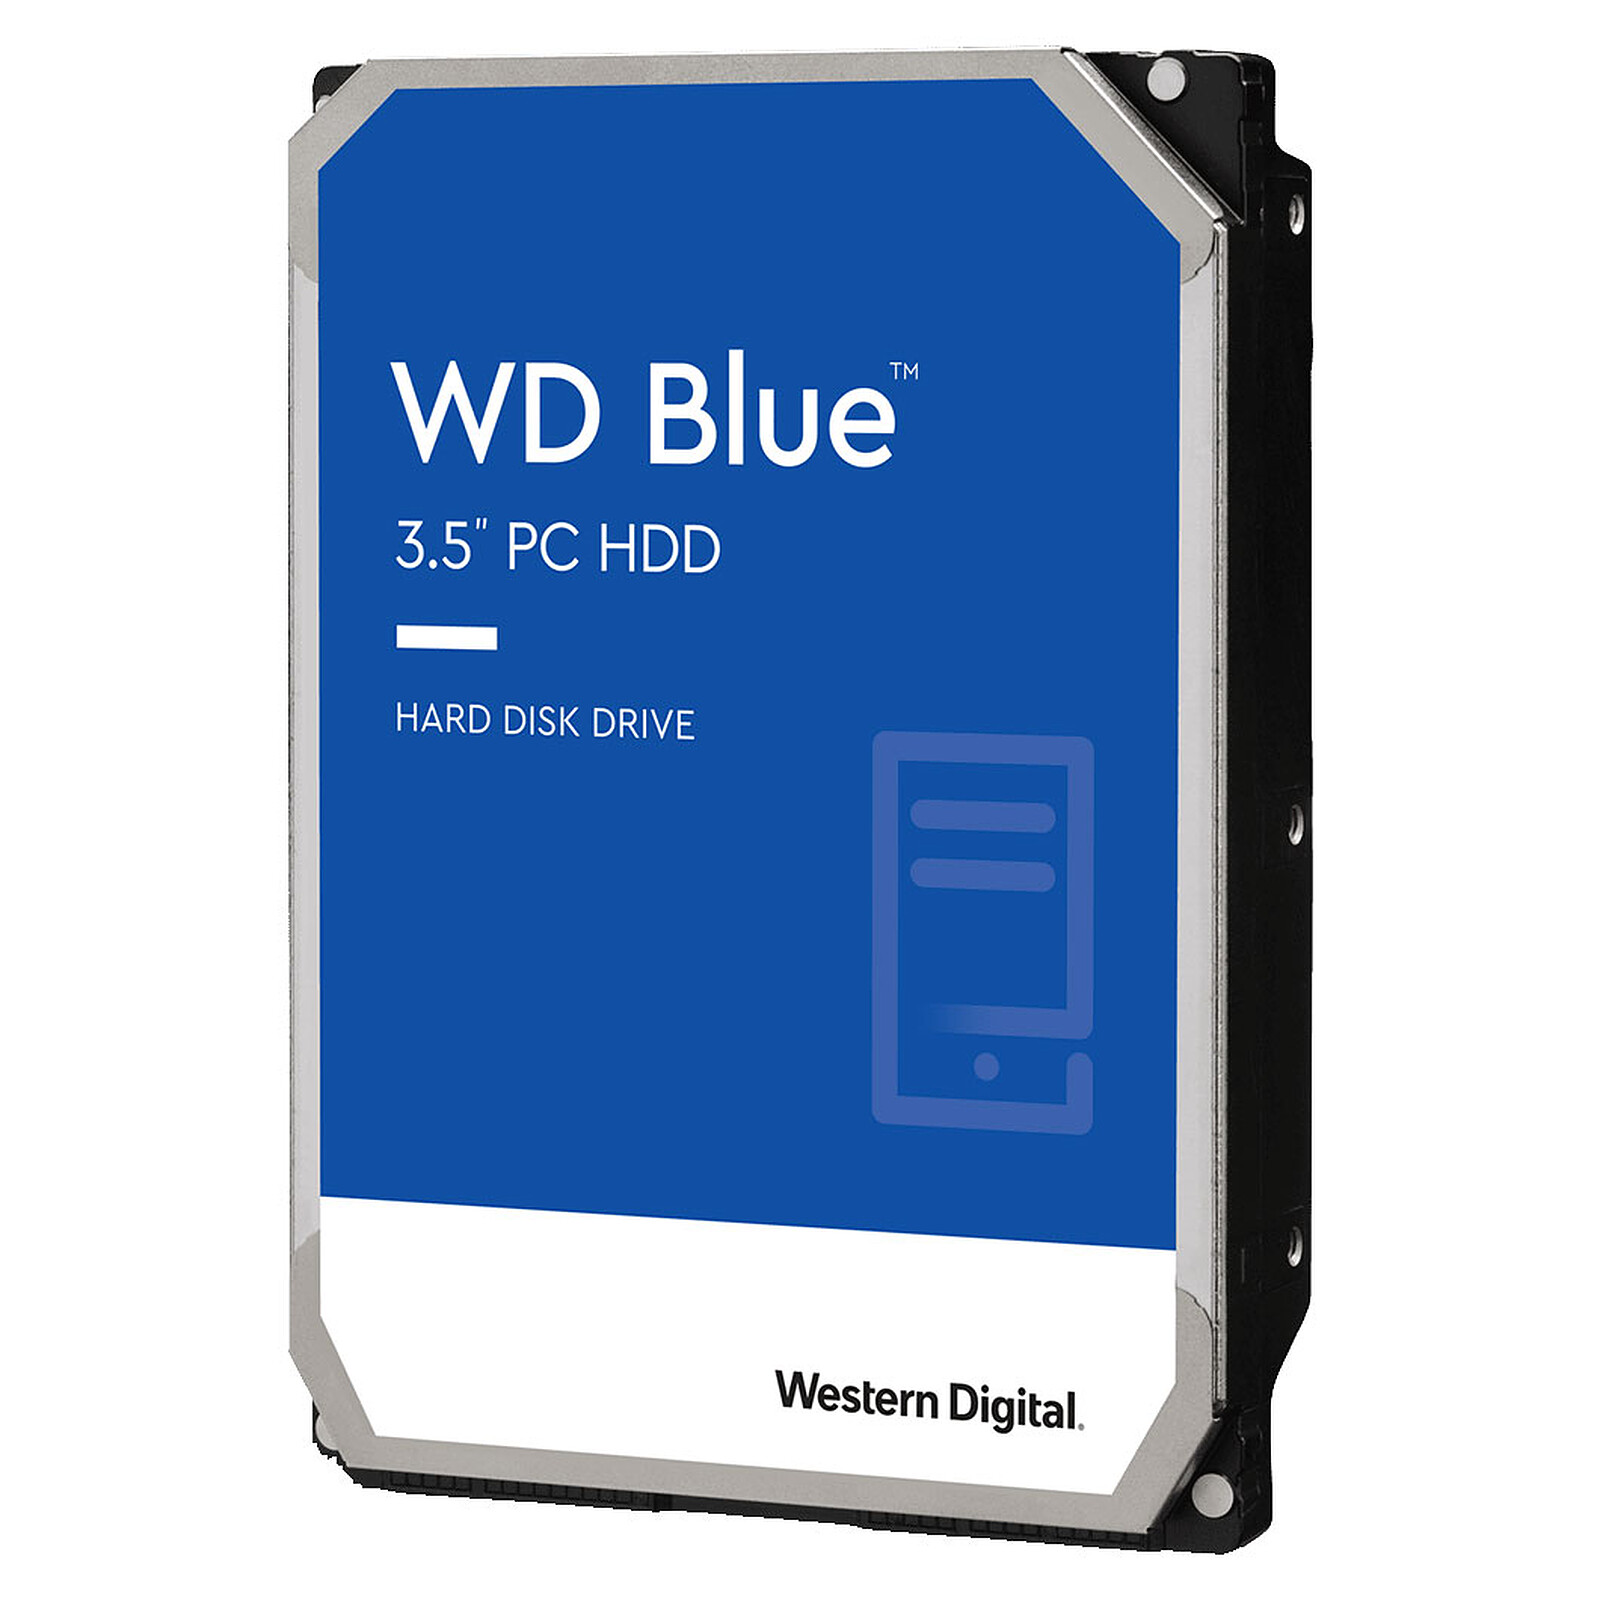 Disque dur interne HDD 500go 3.5'' 7200 pouces, sata 3 6Gb/s